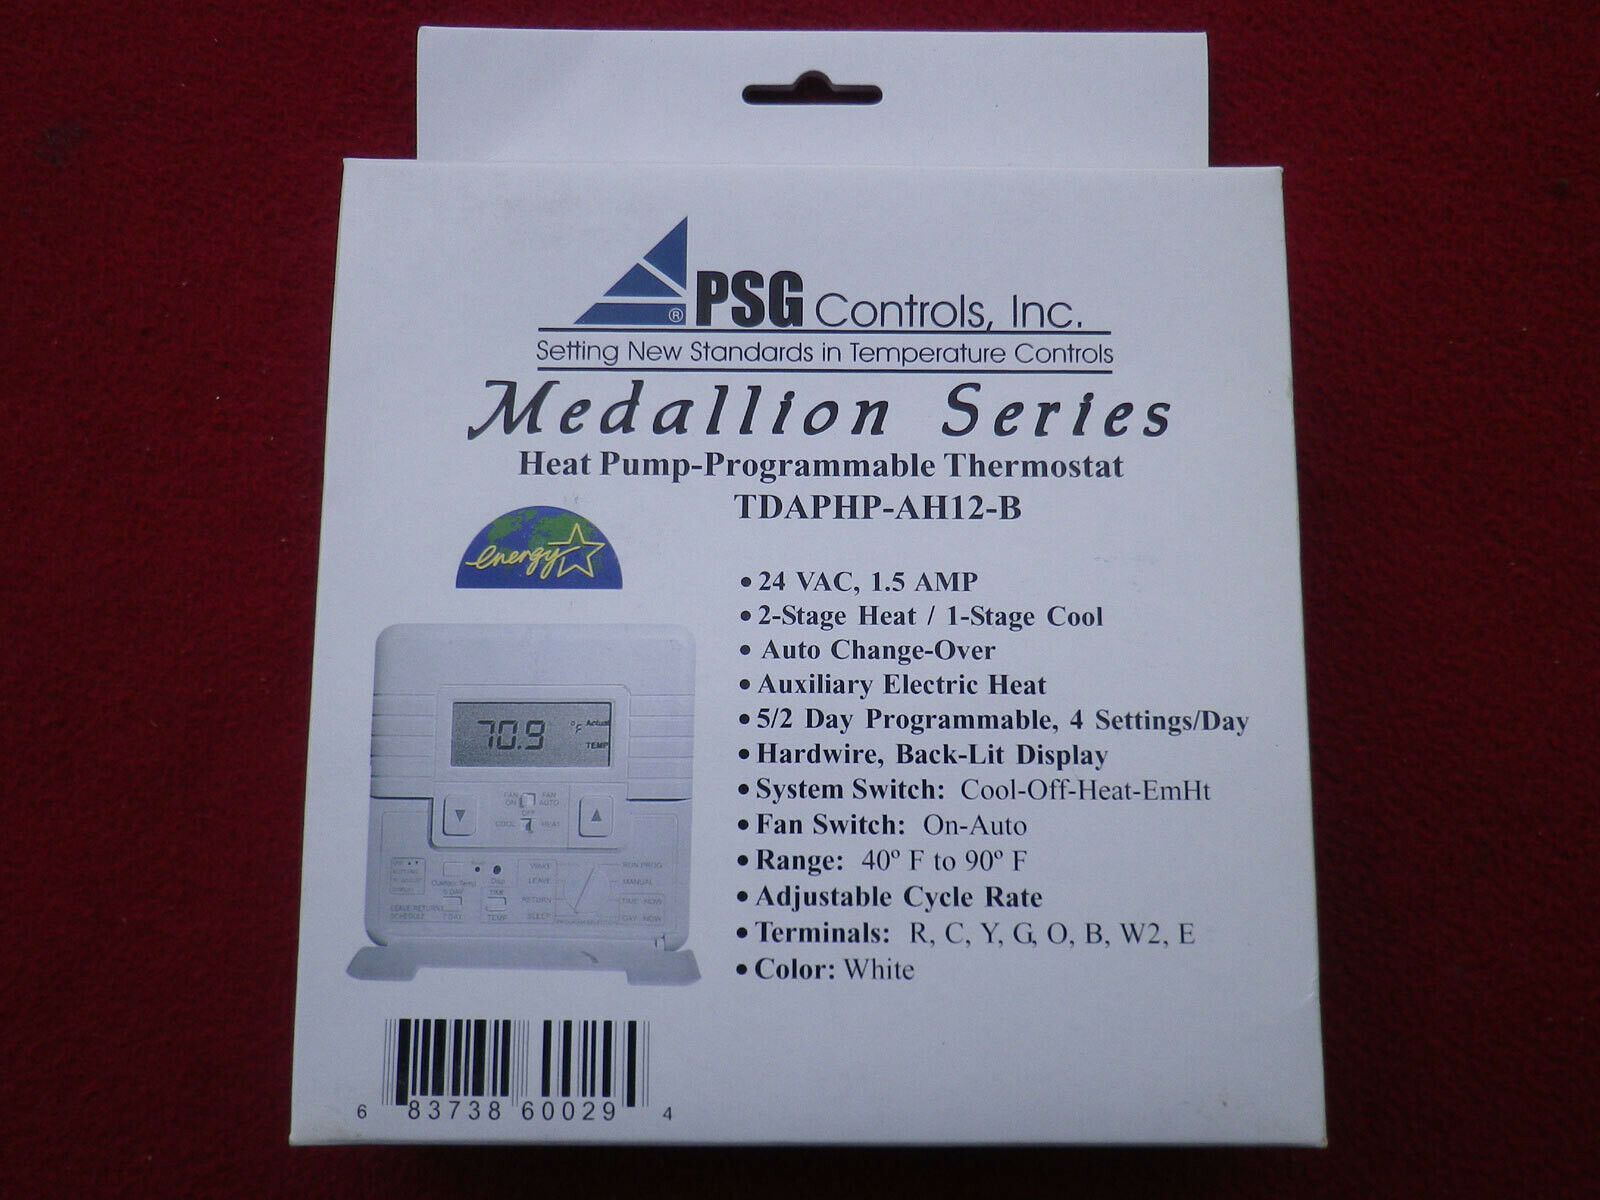 PSG Controls Heat Pump-Programmable Thermostat Medallion Series TDAPHP-AH12-B